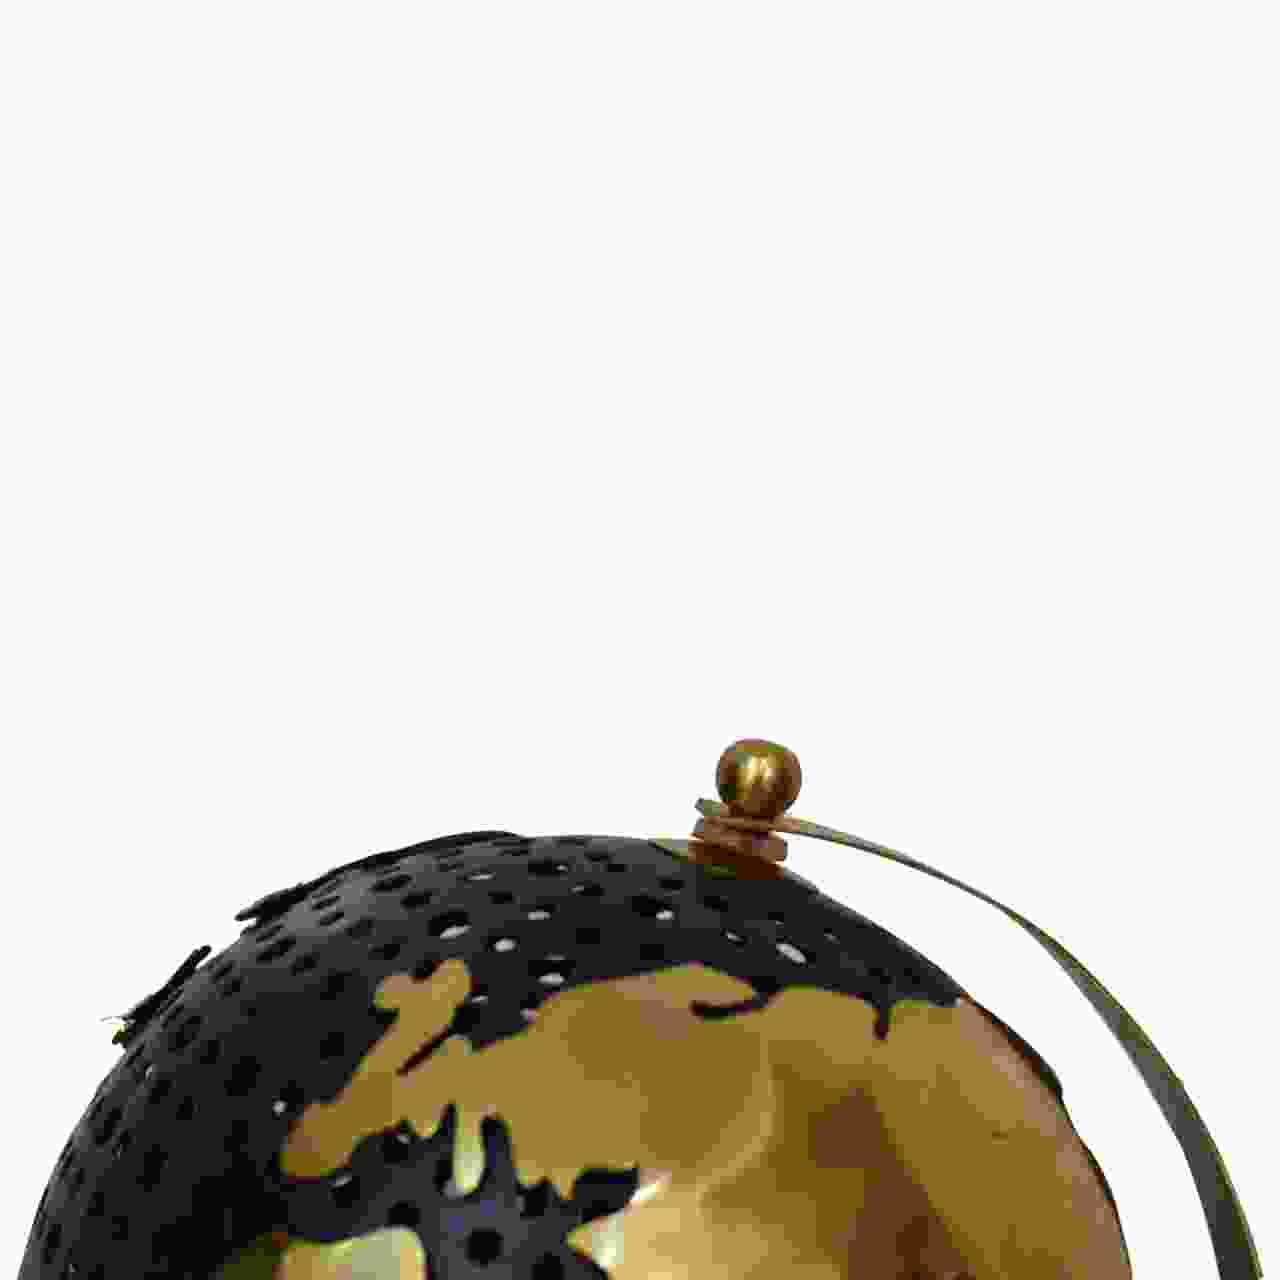 Schwarzer Globus mit goldenem Rahmen